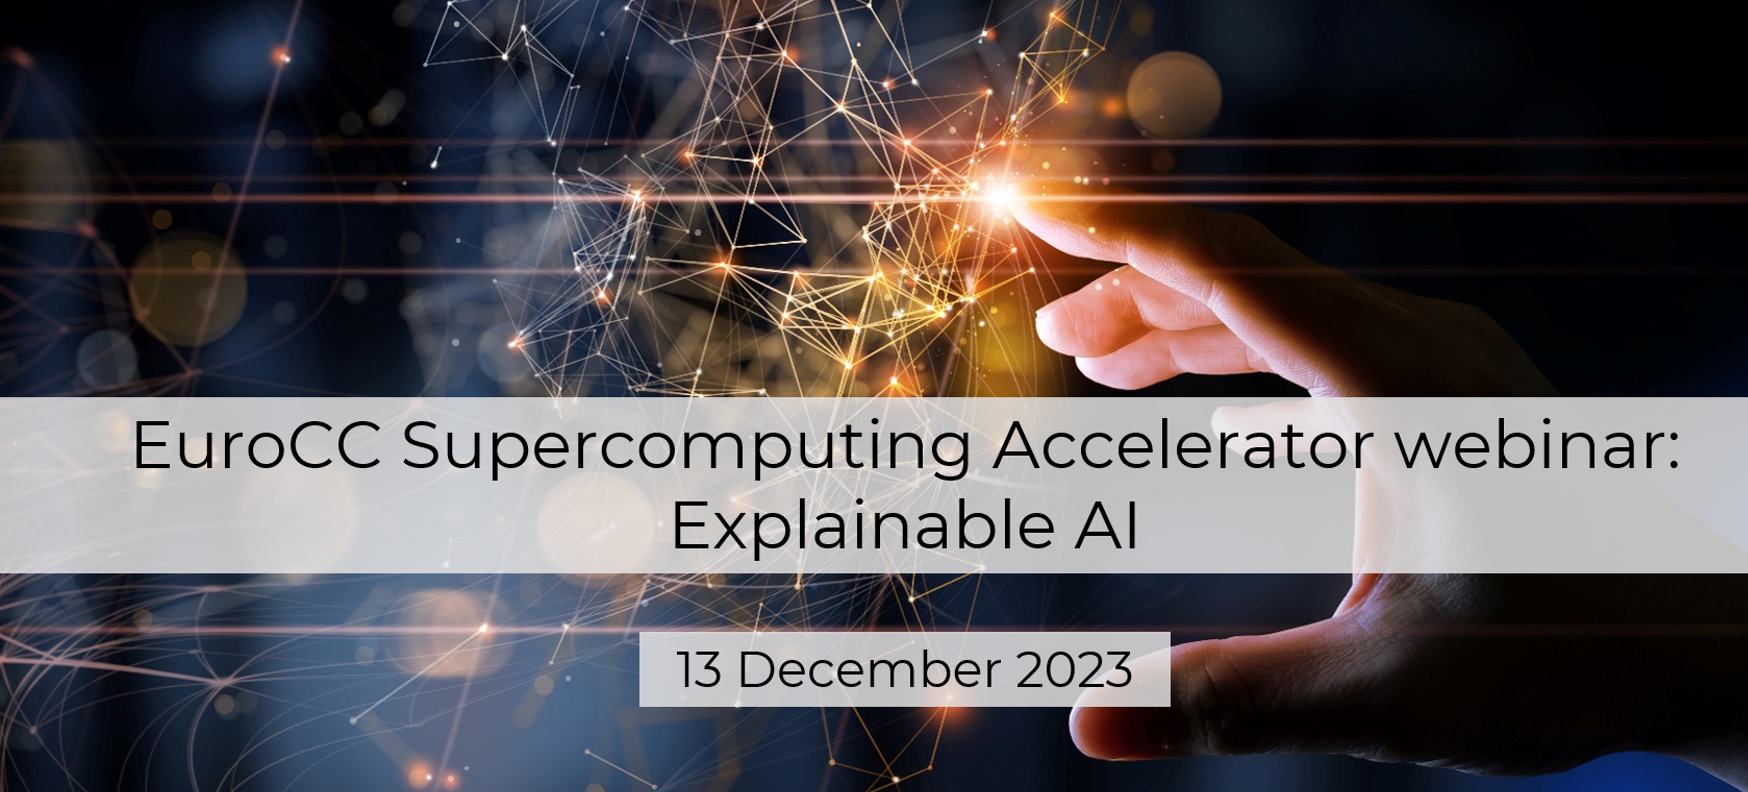 EuroCC Supercomputing Accelerator webinar: Explainable AI, 13.12.2023г, НЦК Словакия, онлайн